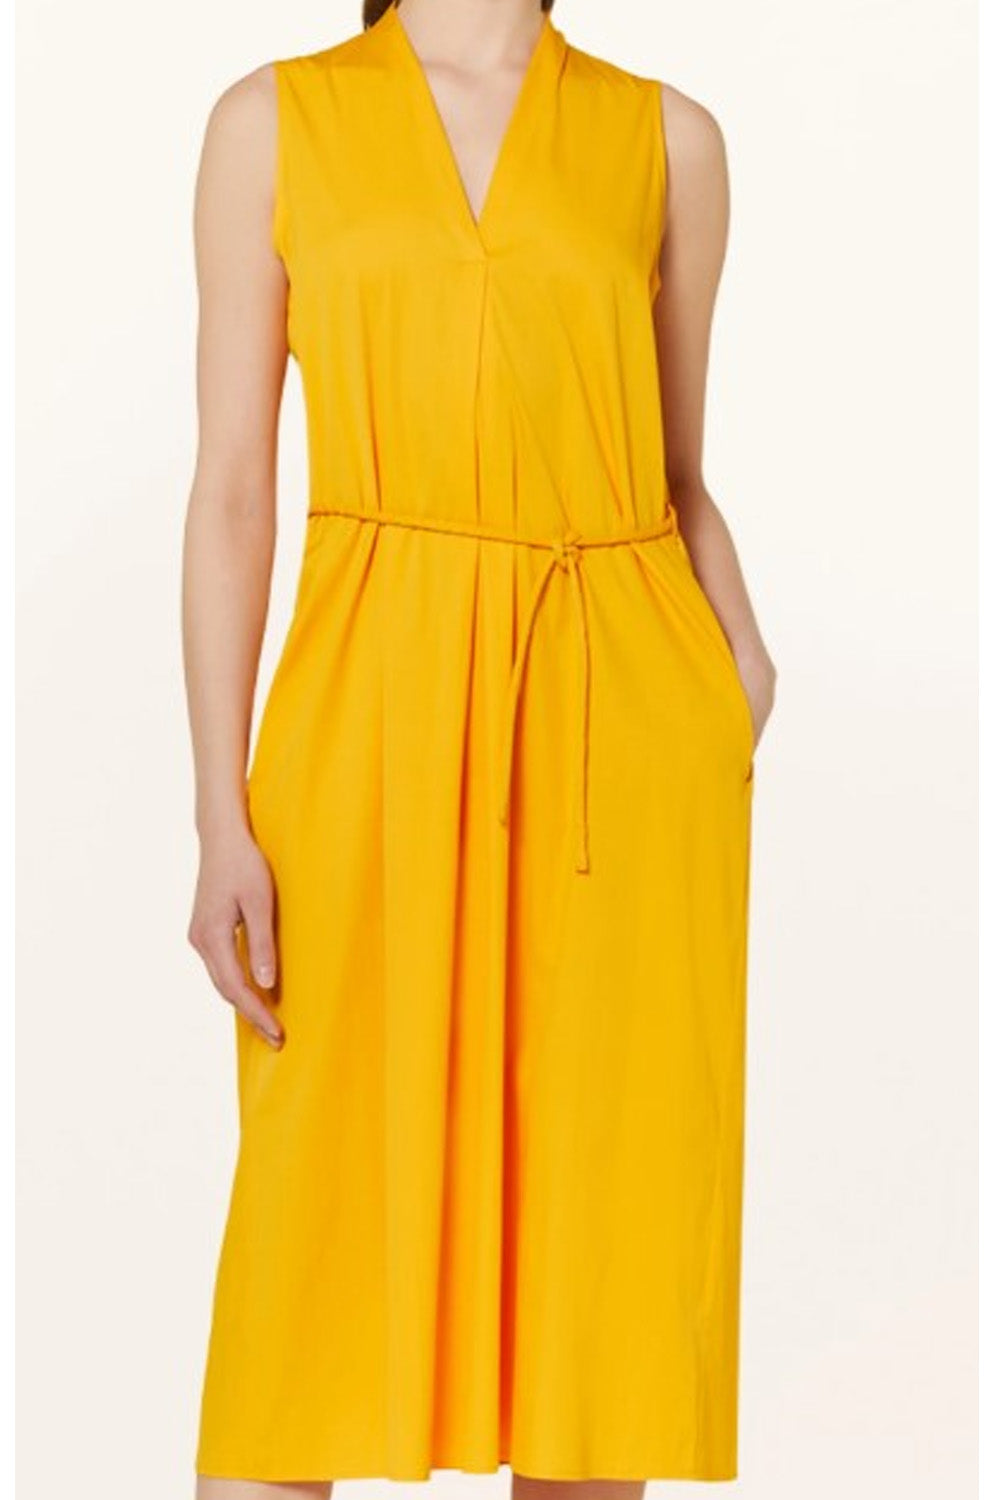 Organica  Yellow Dress